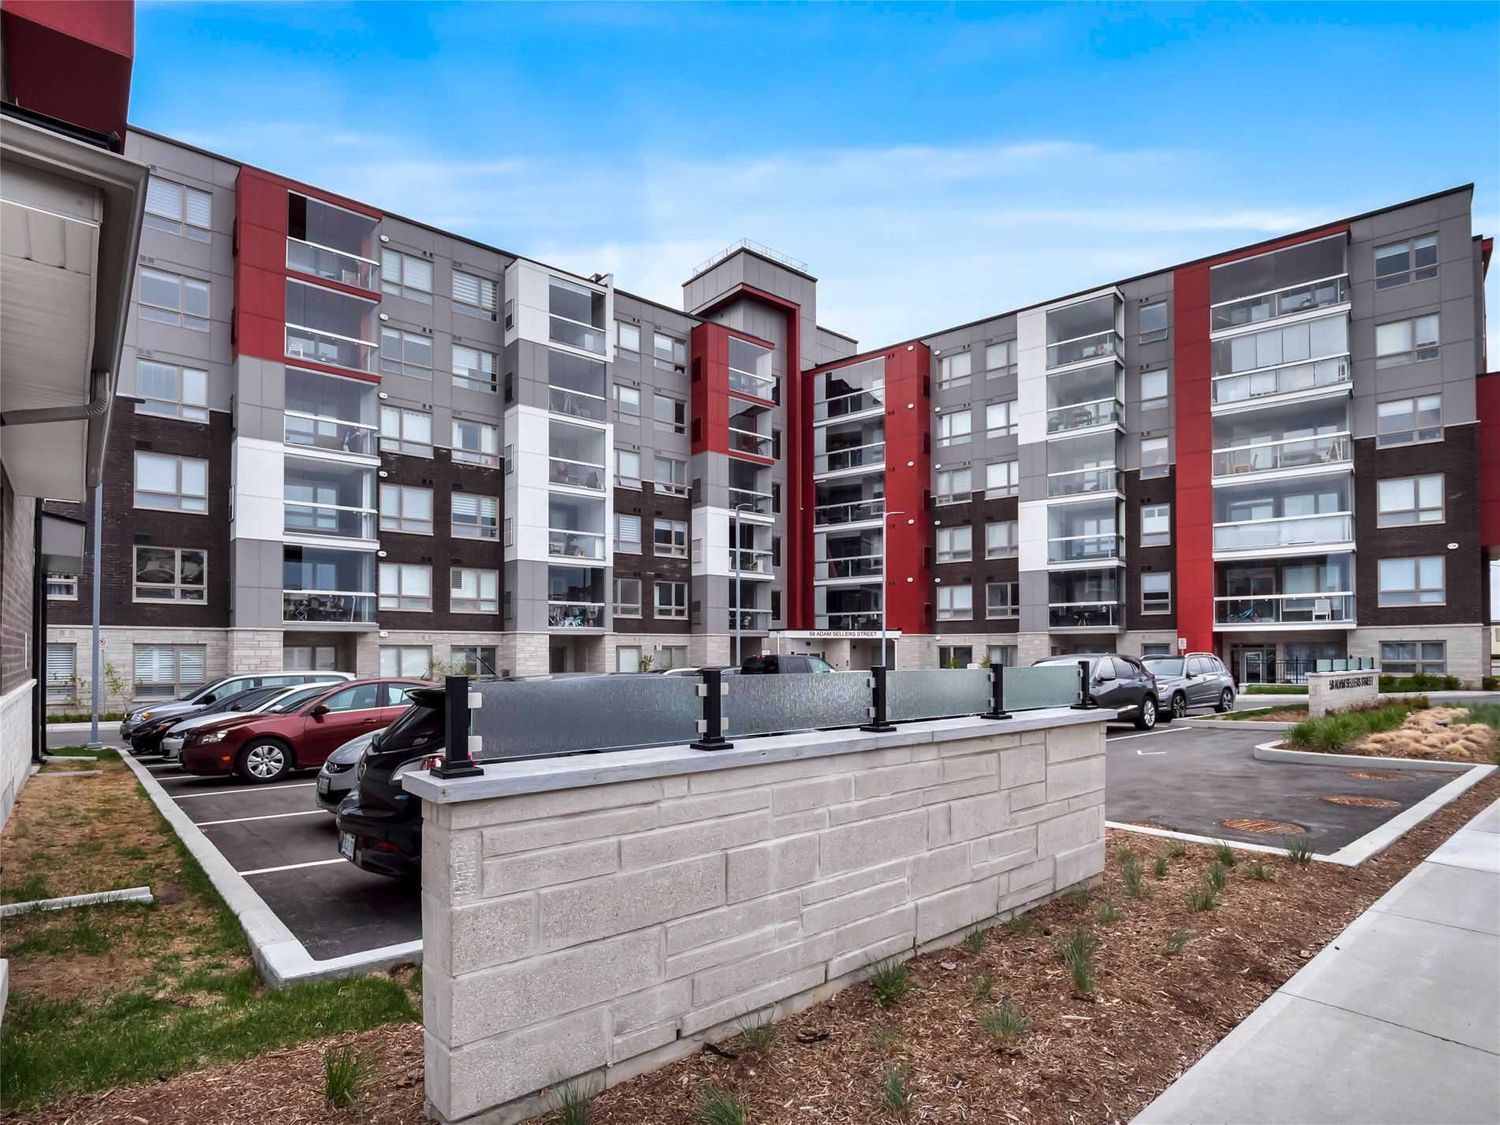 3150 Bur Oak Avenue. The Condominiums of Cornell is located in  Markham, Toronto - image #2 of 3